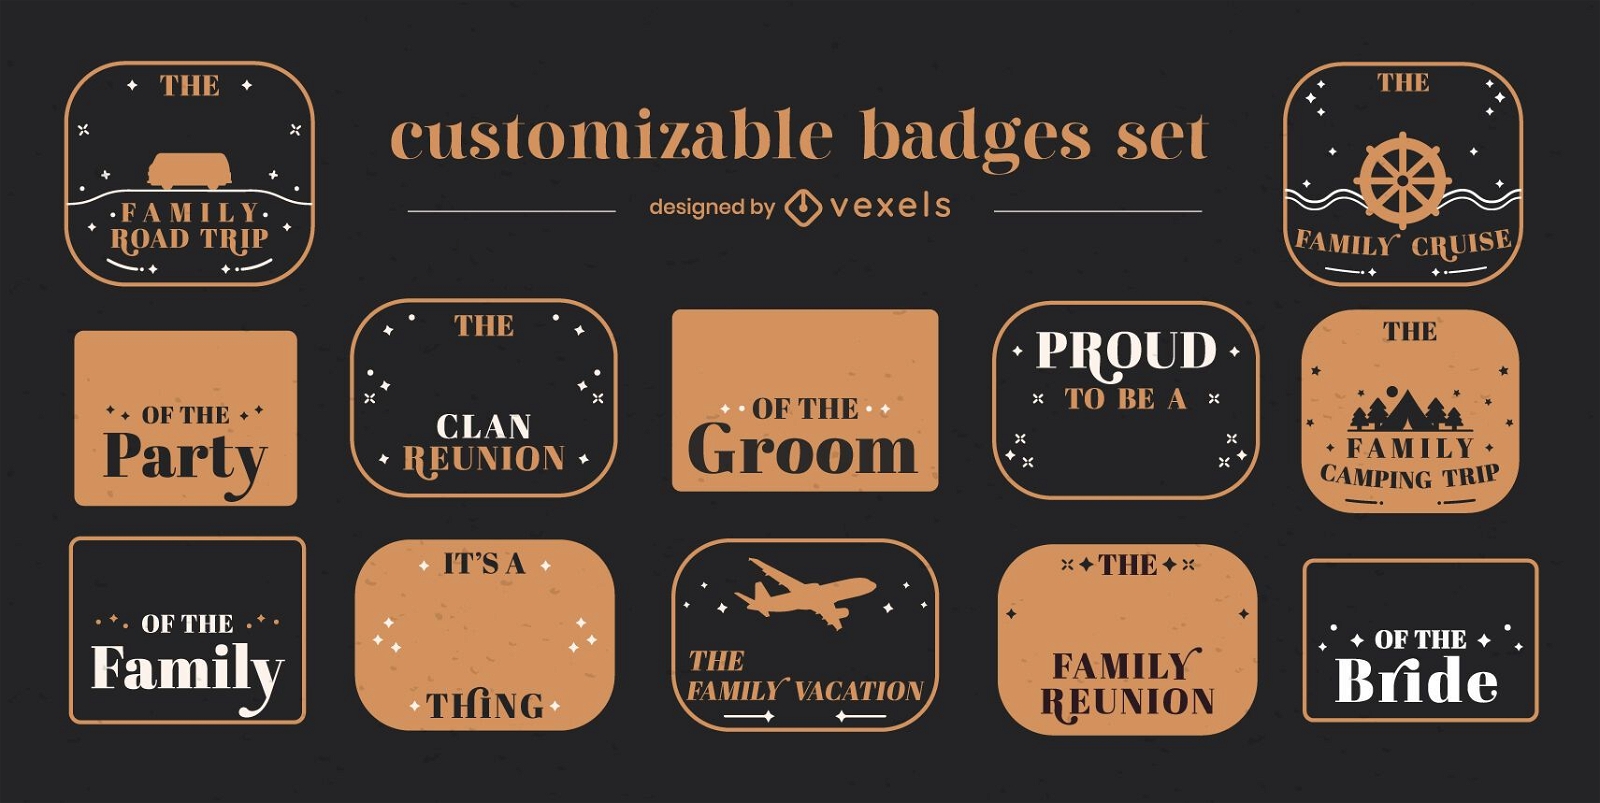 Family trip badges customizable set